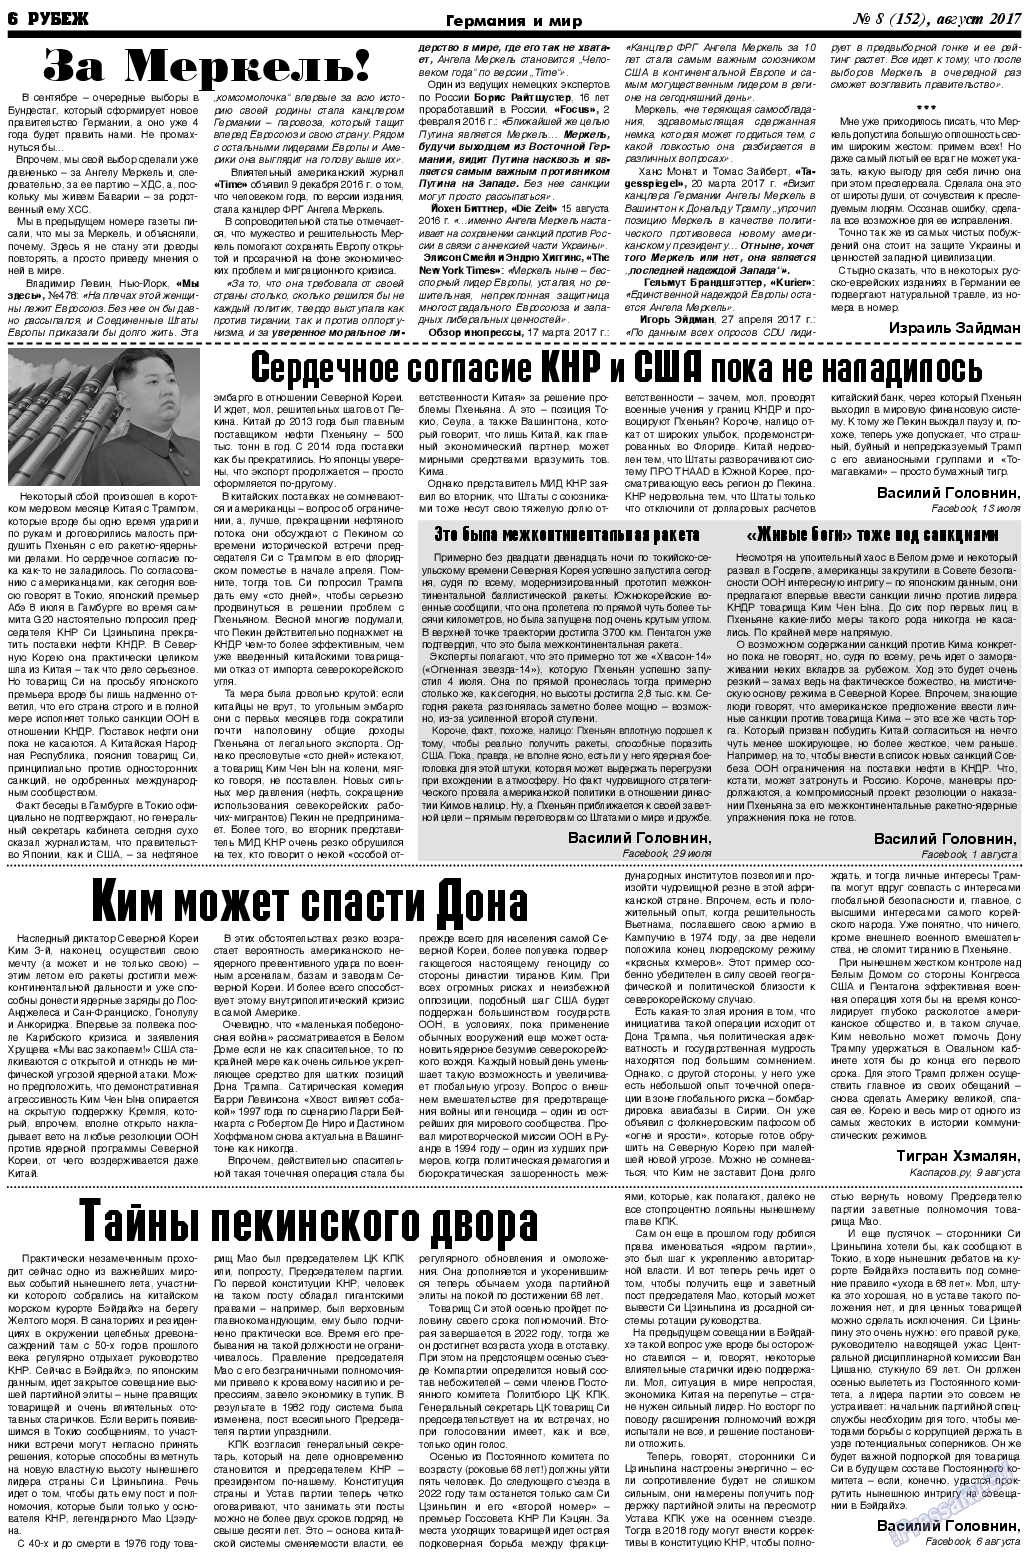 Рубеж, газета. 2017 №8 стр.6